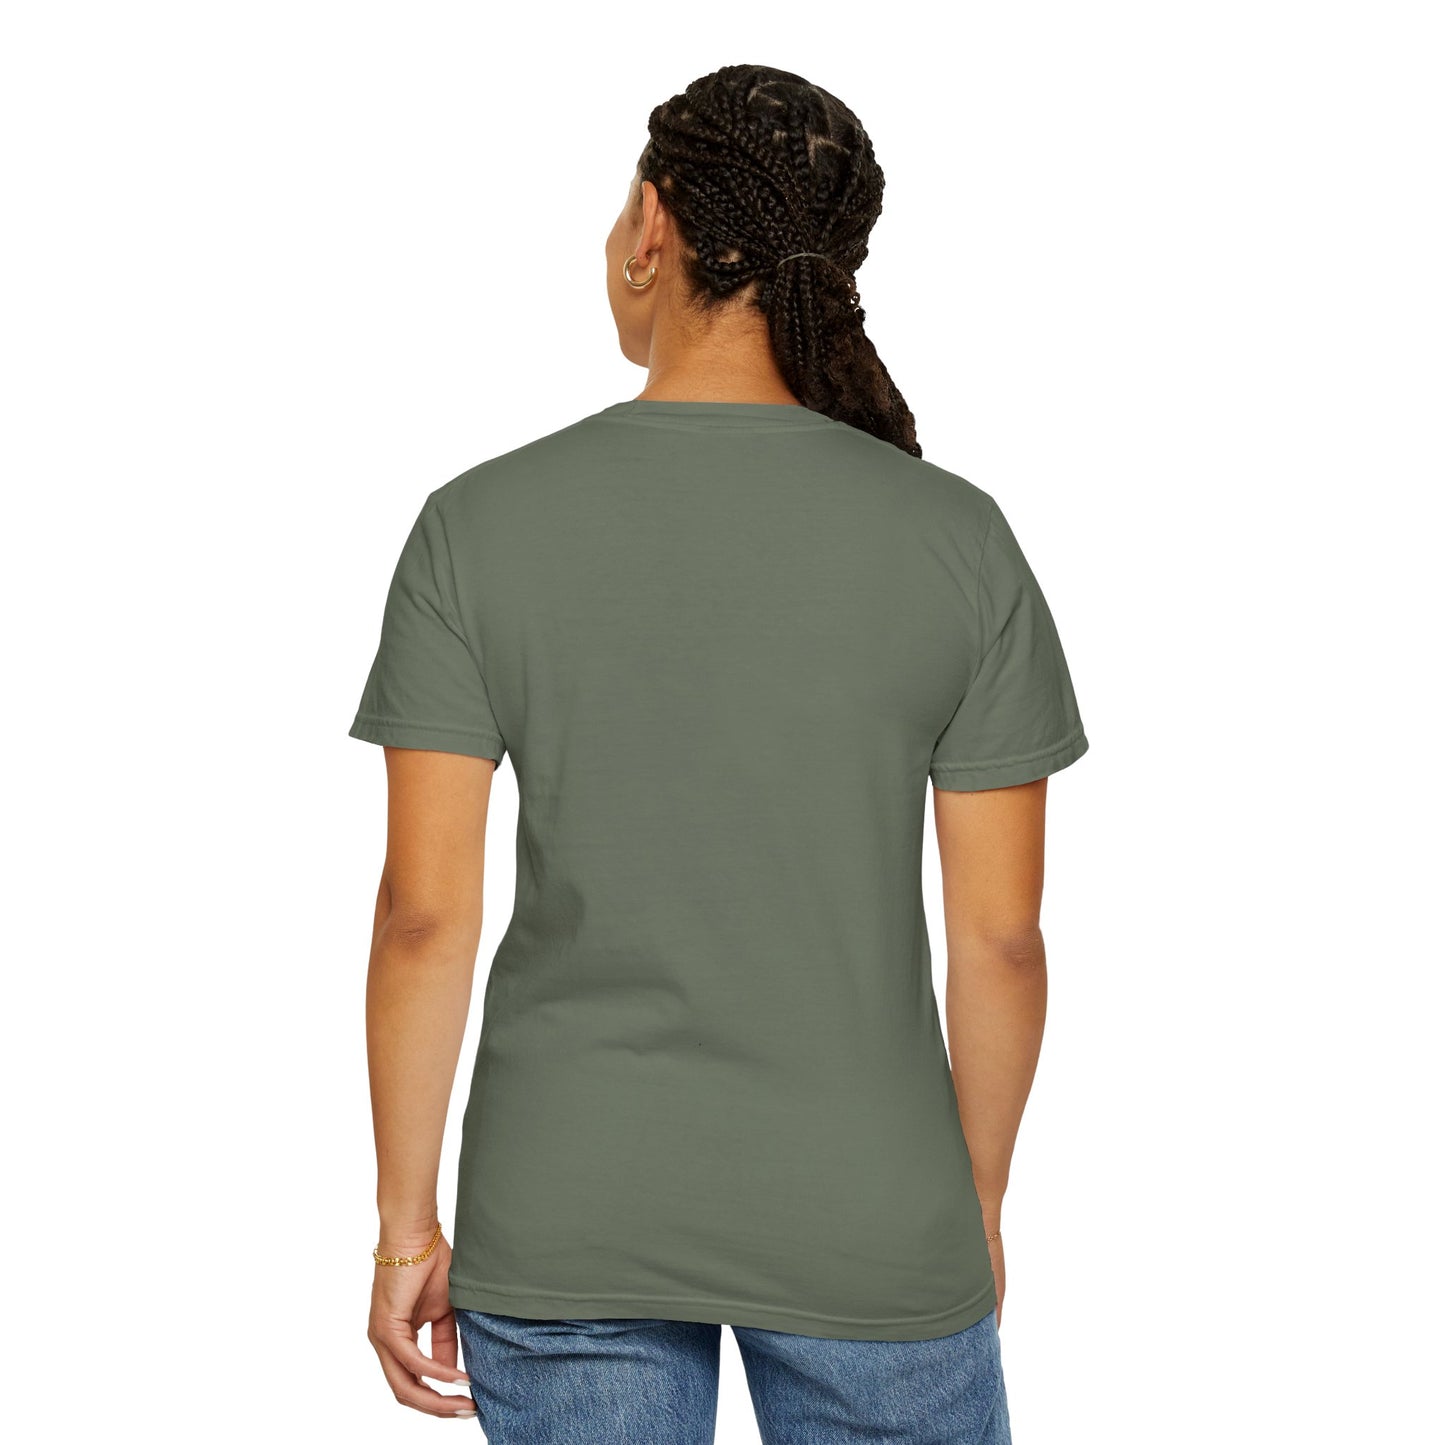 Life status currently holding - Unisex Garment-Dyed T-shirt